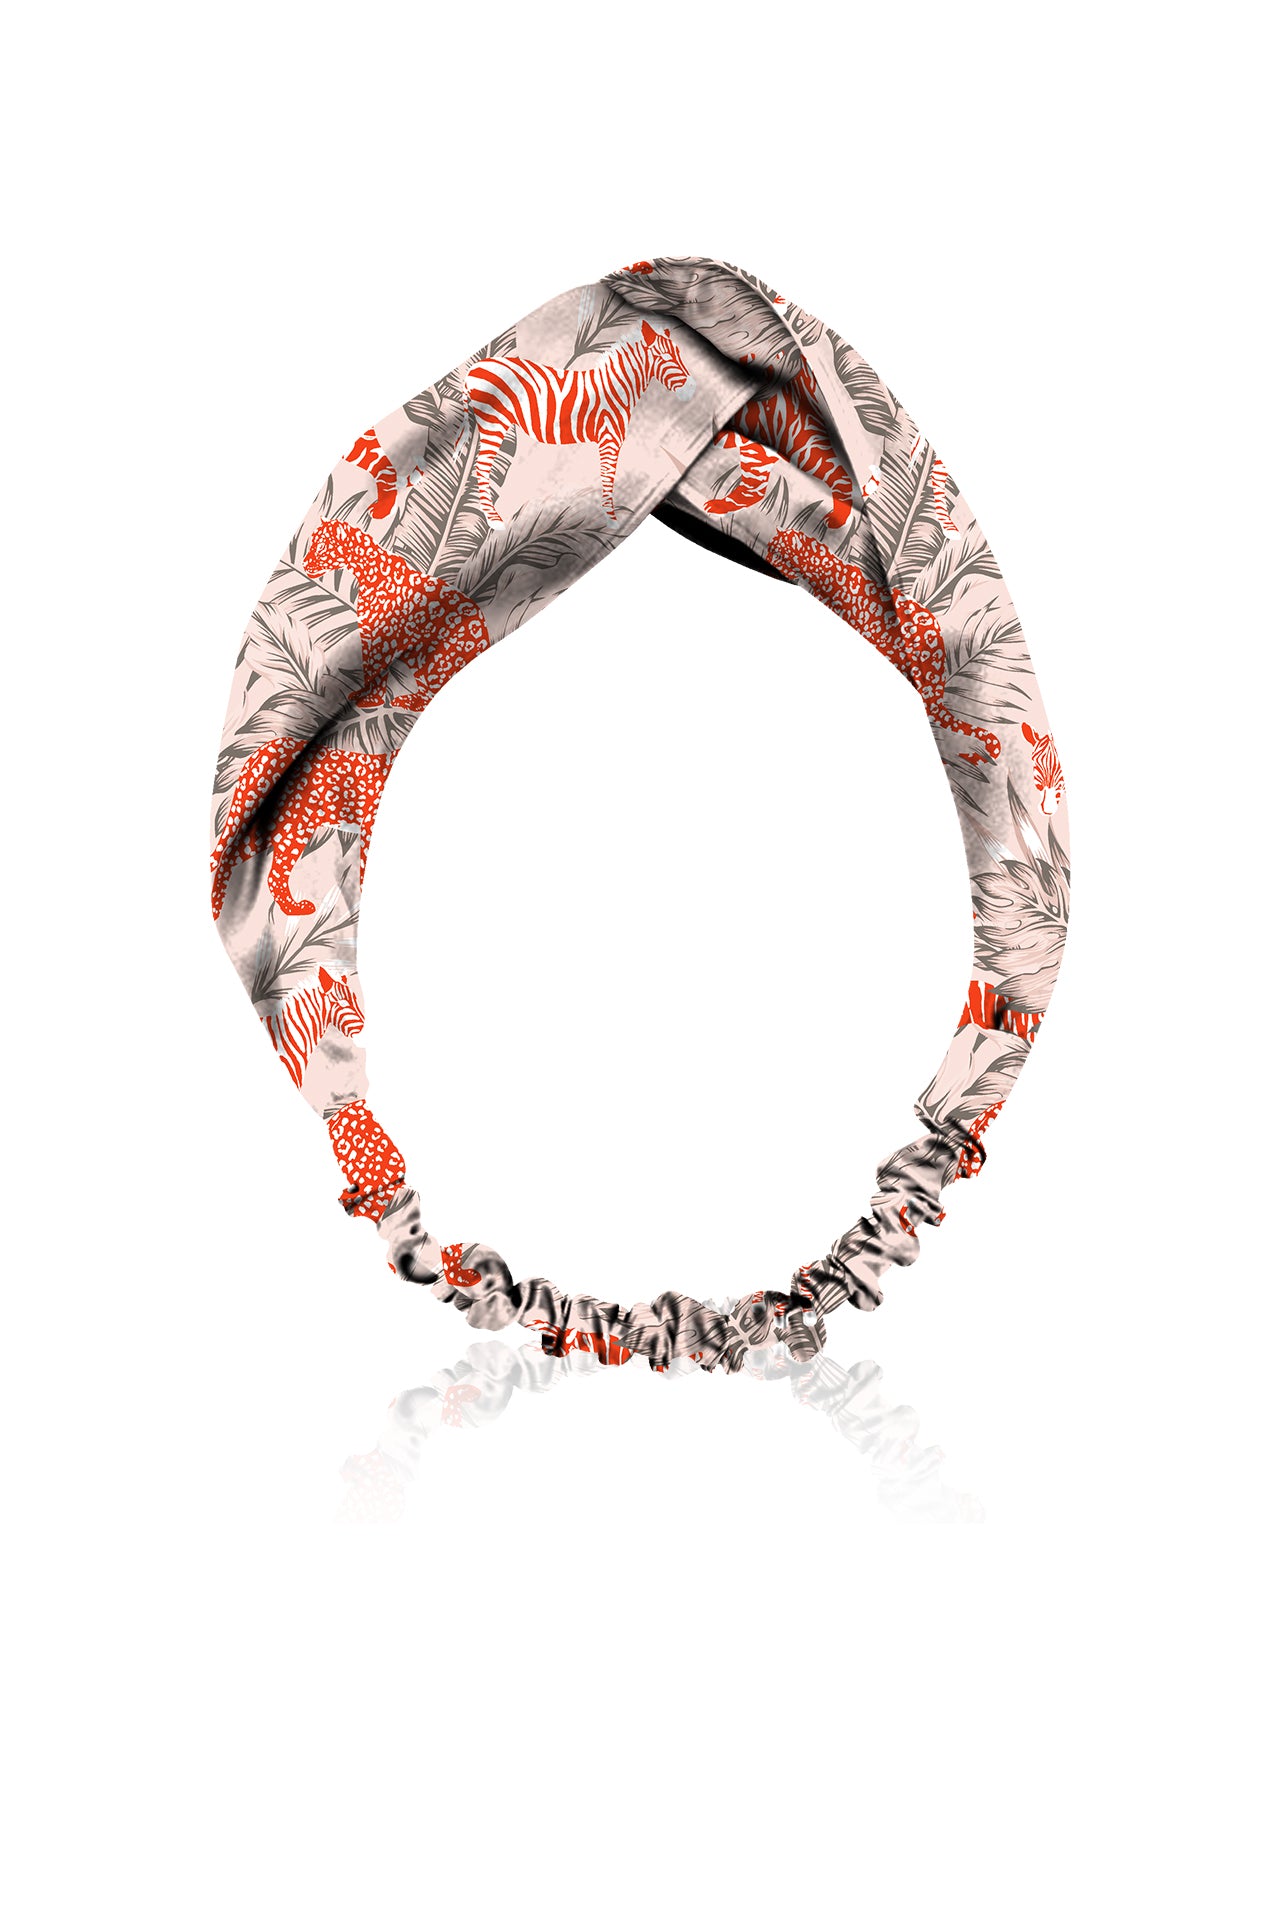 Zebra Print Headband & Headwrap in Orange